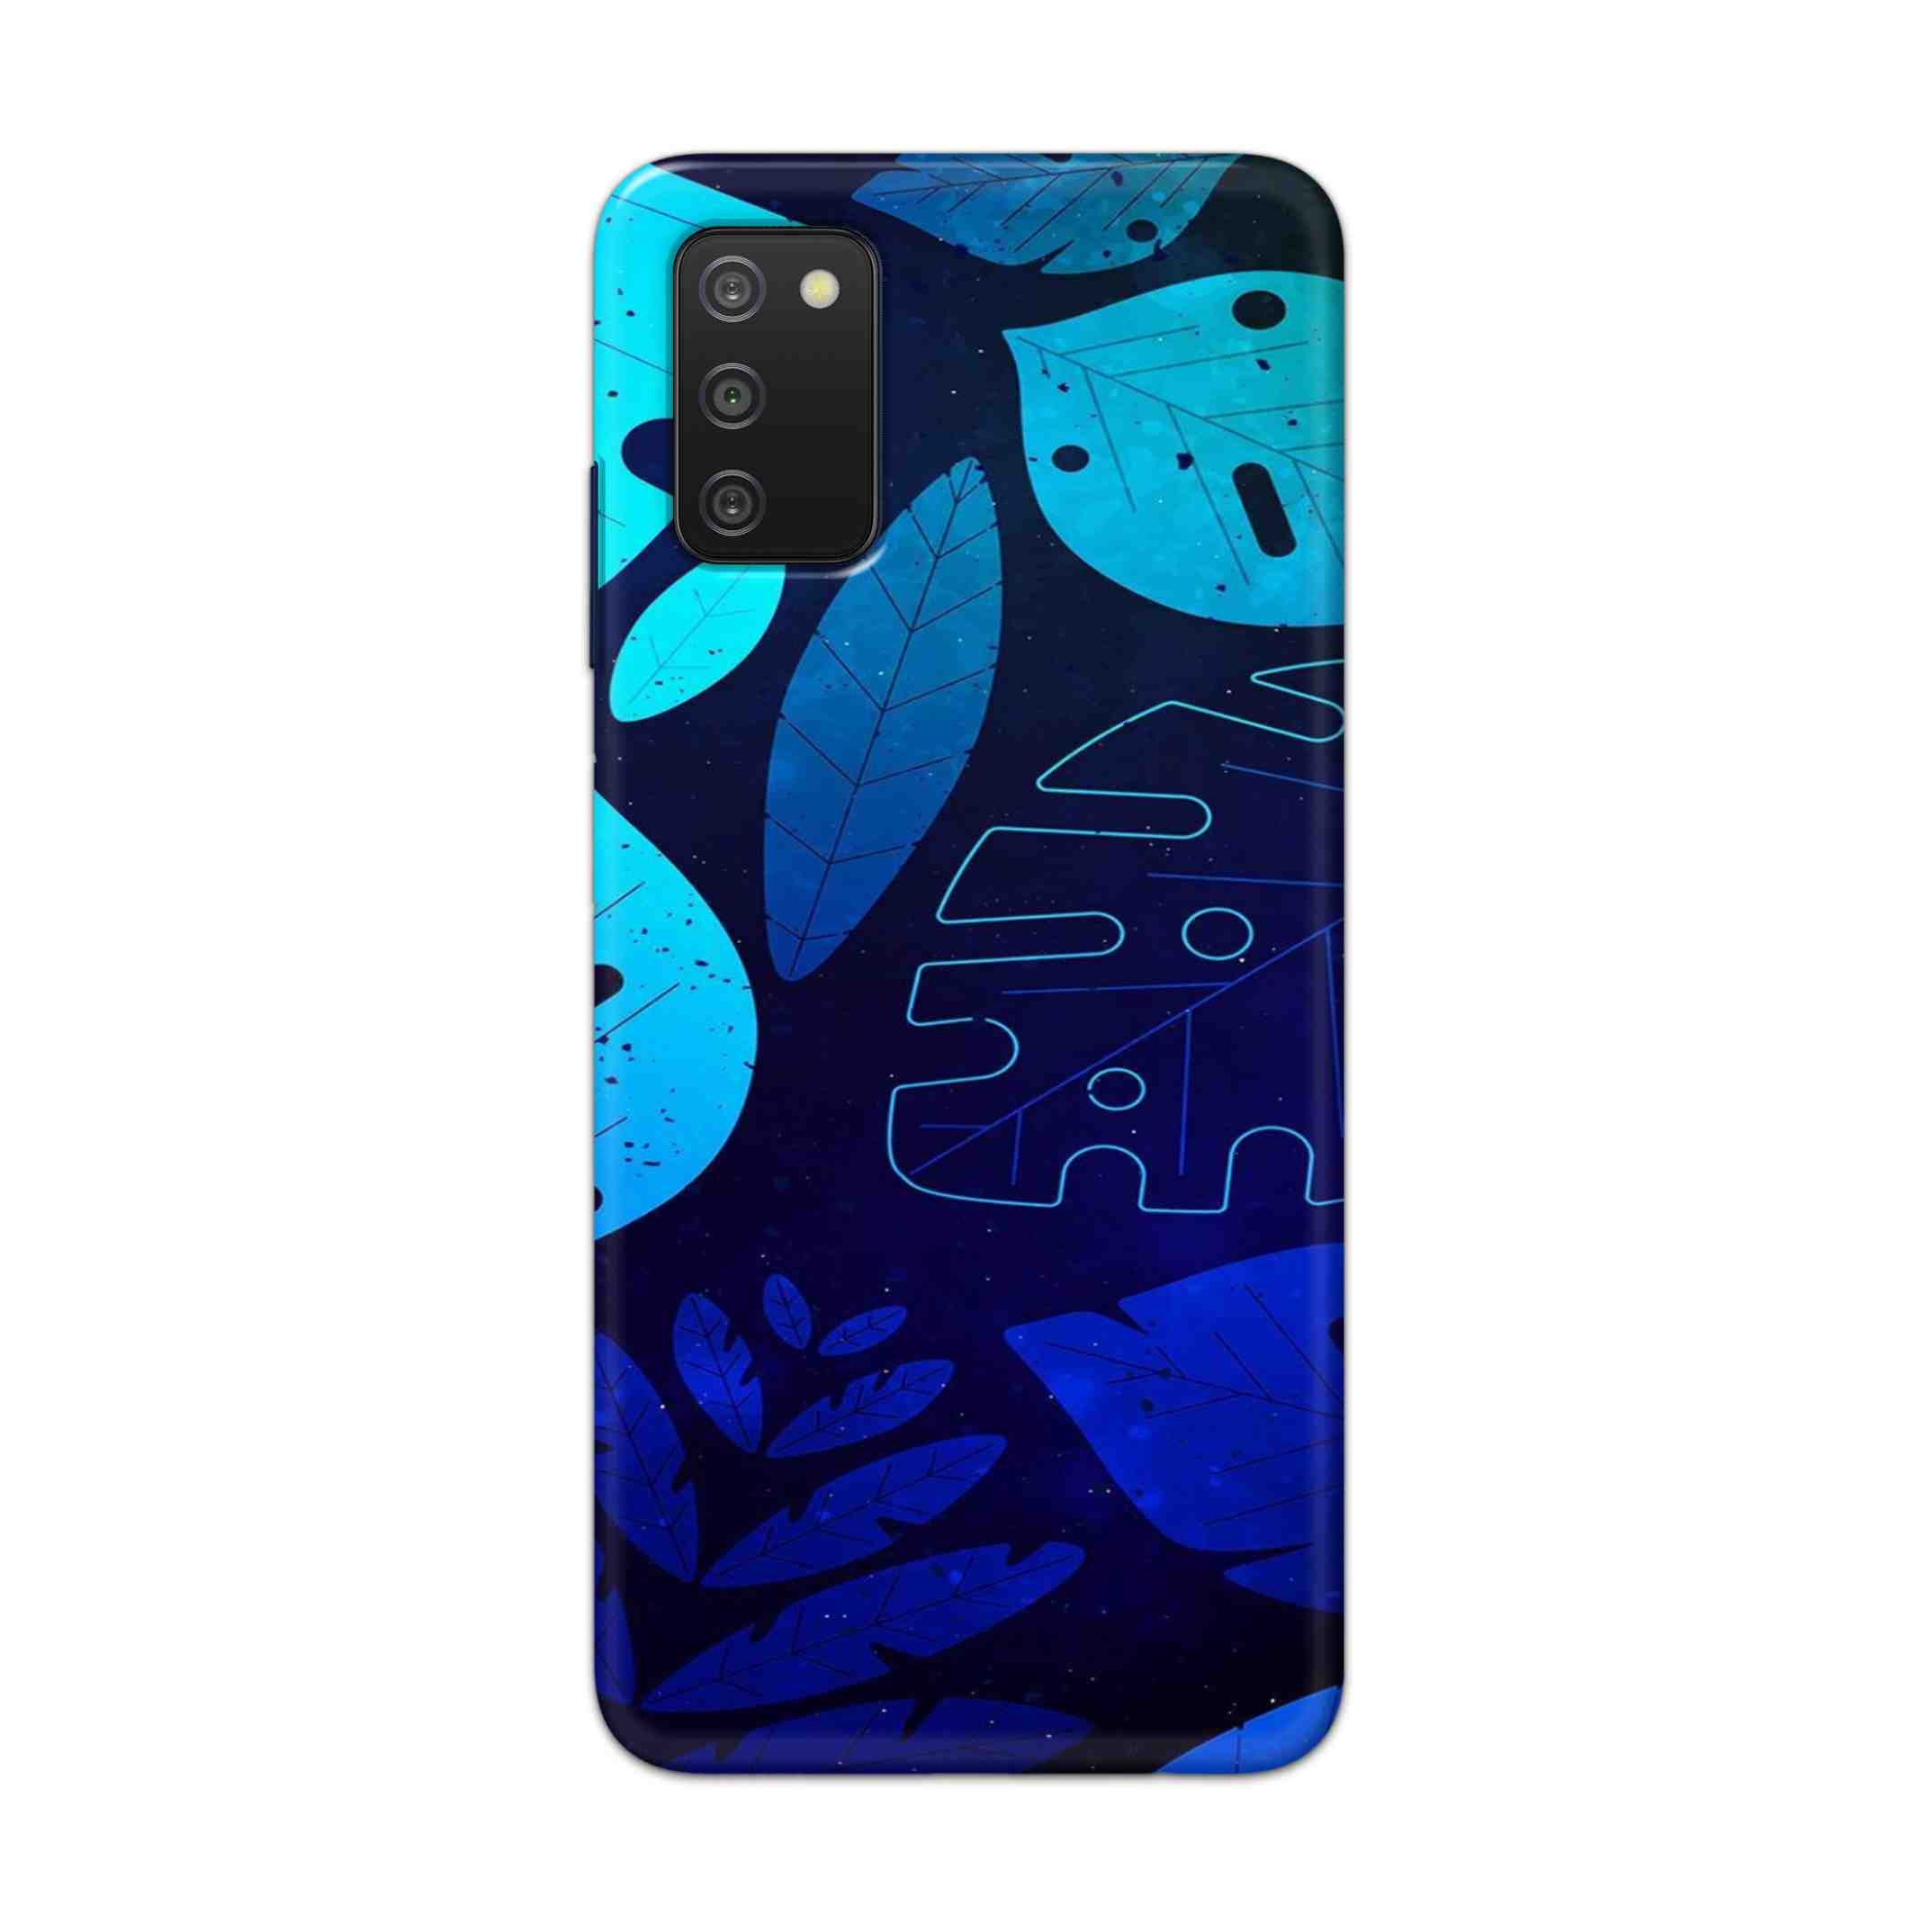 Buy Neon Leaf Hard Back Mobile Phone Case Cover For Samsung A03s Online